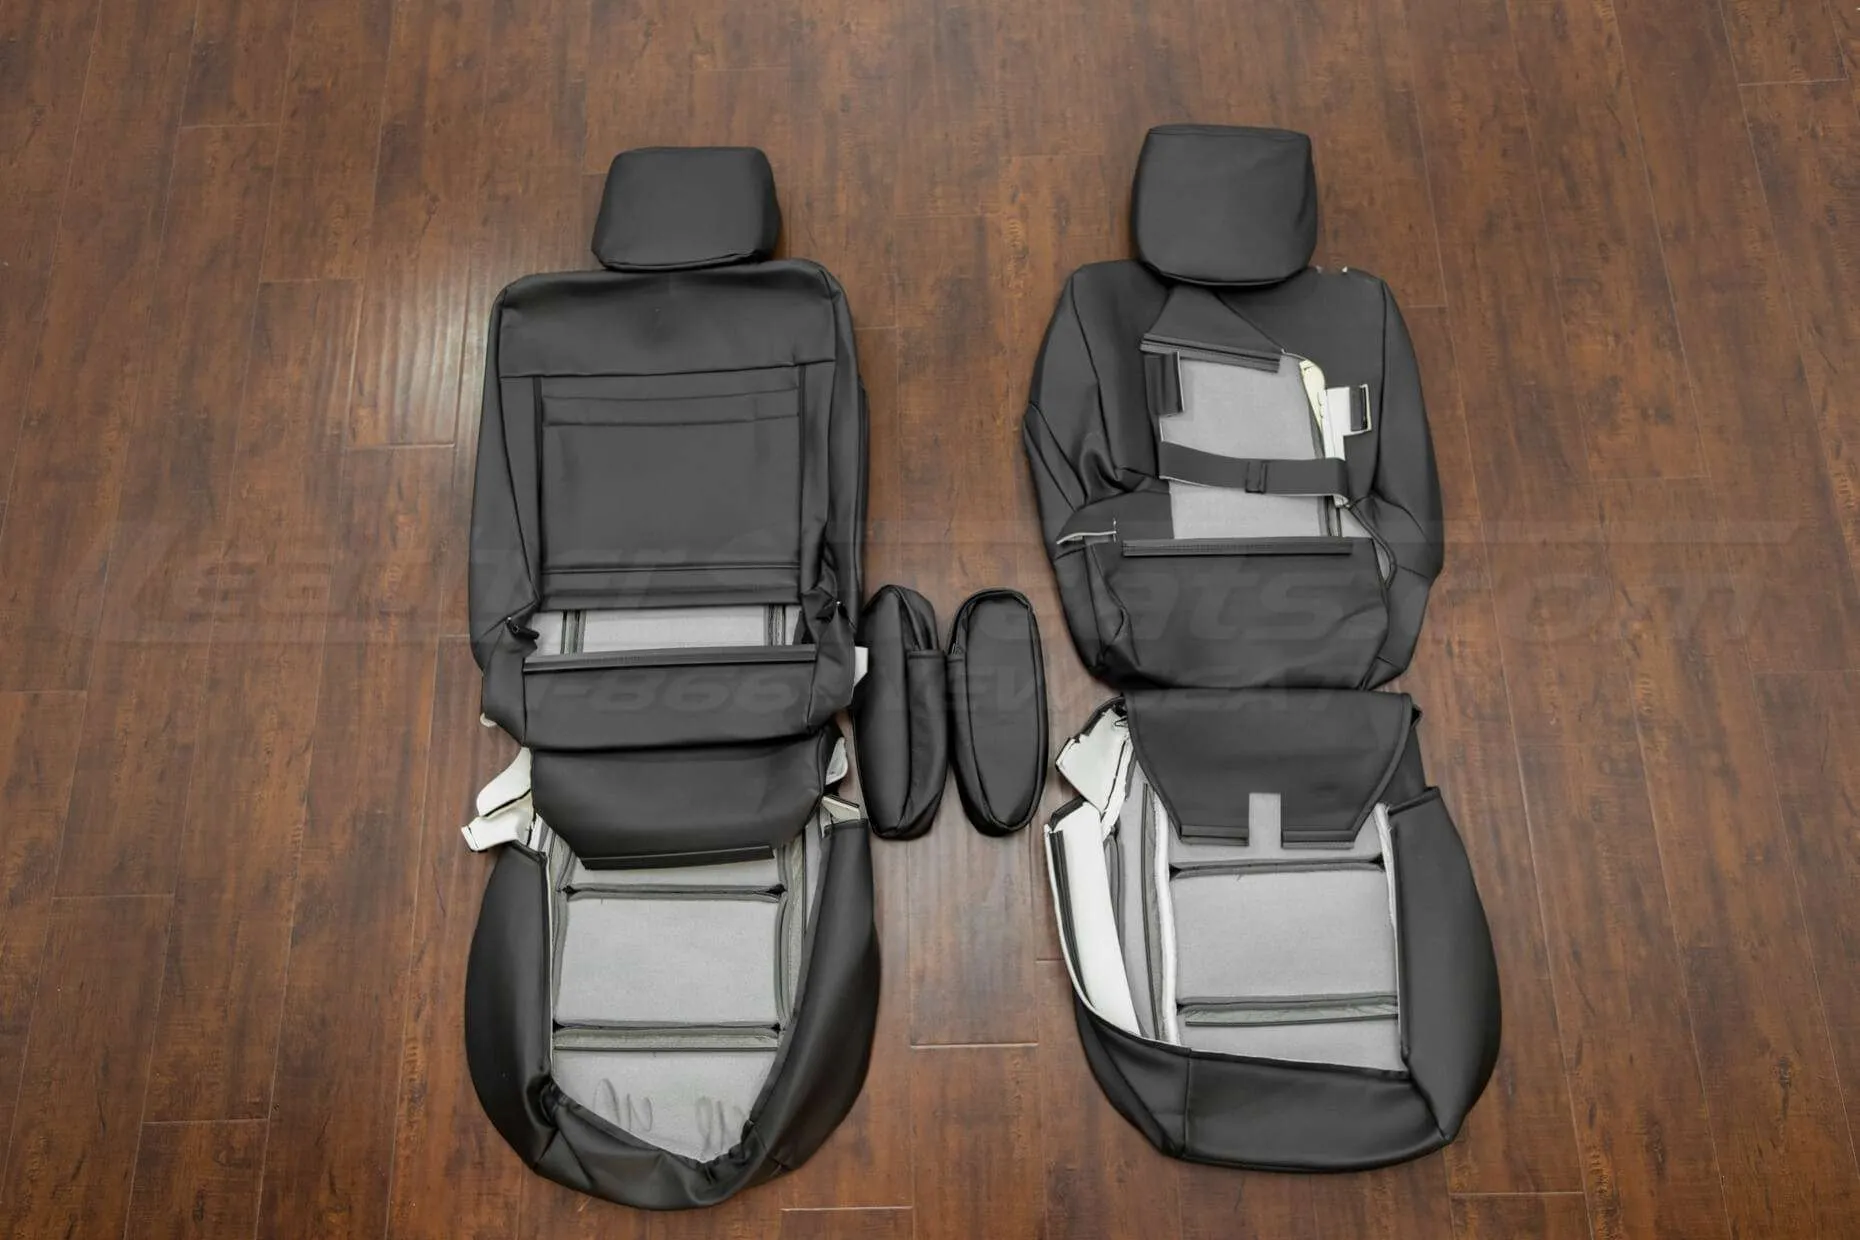 Nissan Titan Upholstery Kit - Black - Back of front seats and armrest